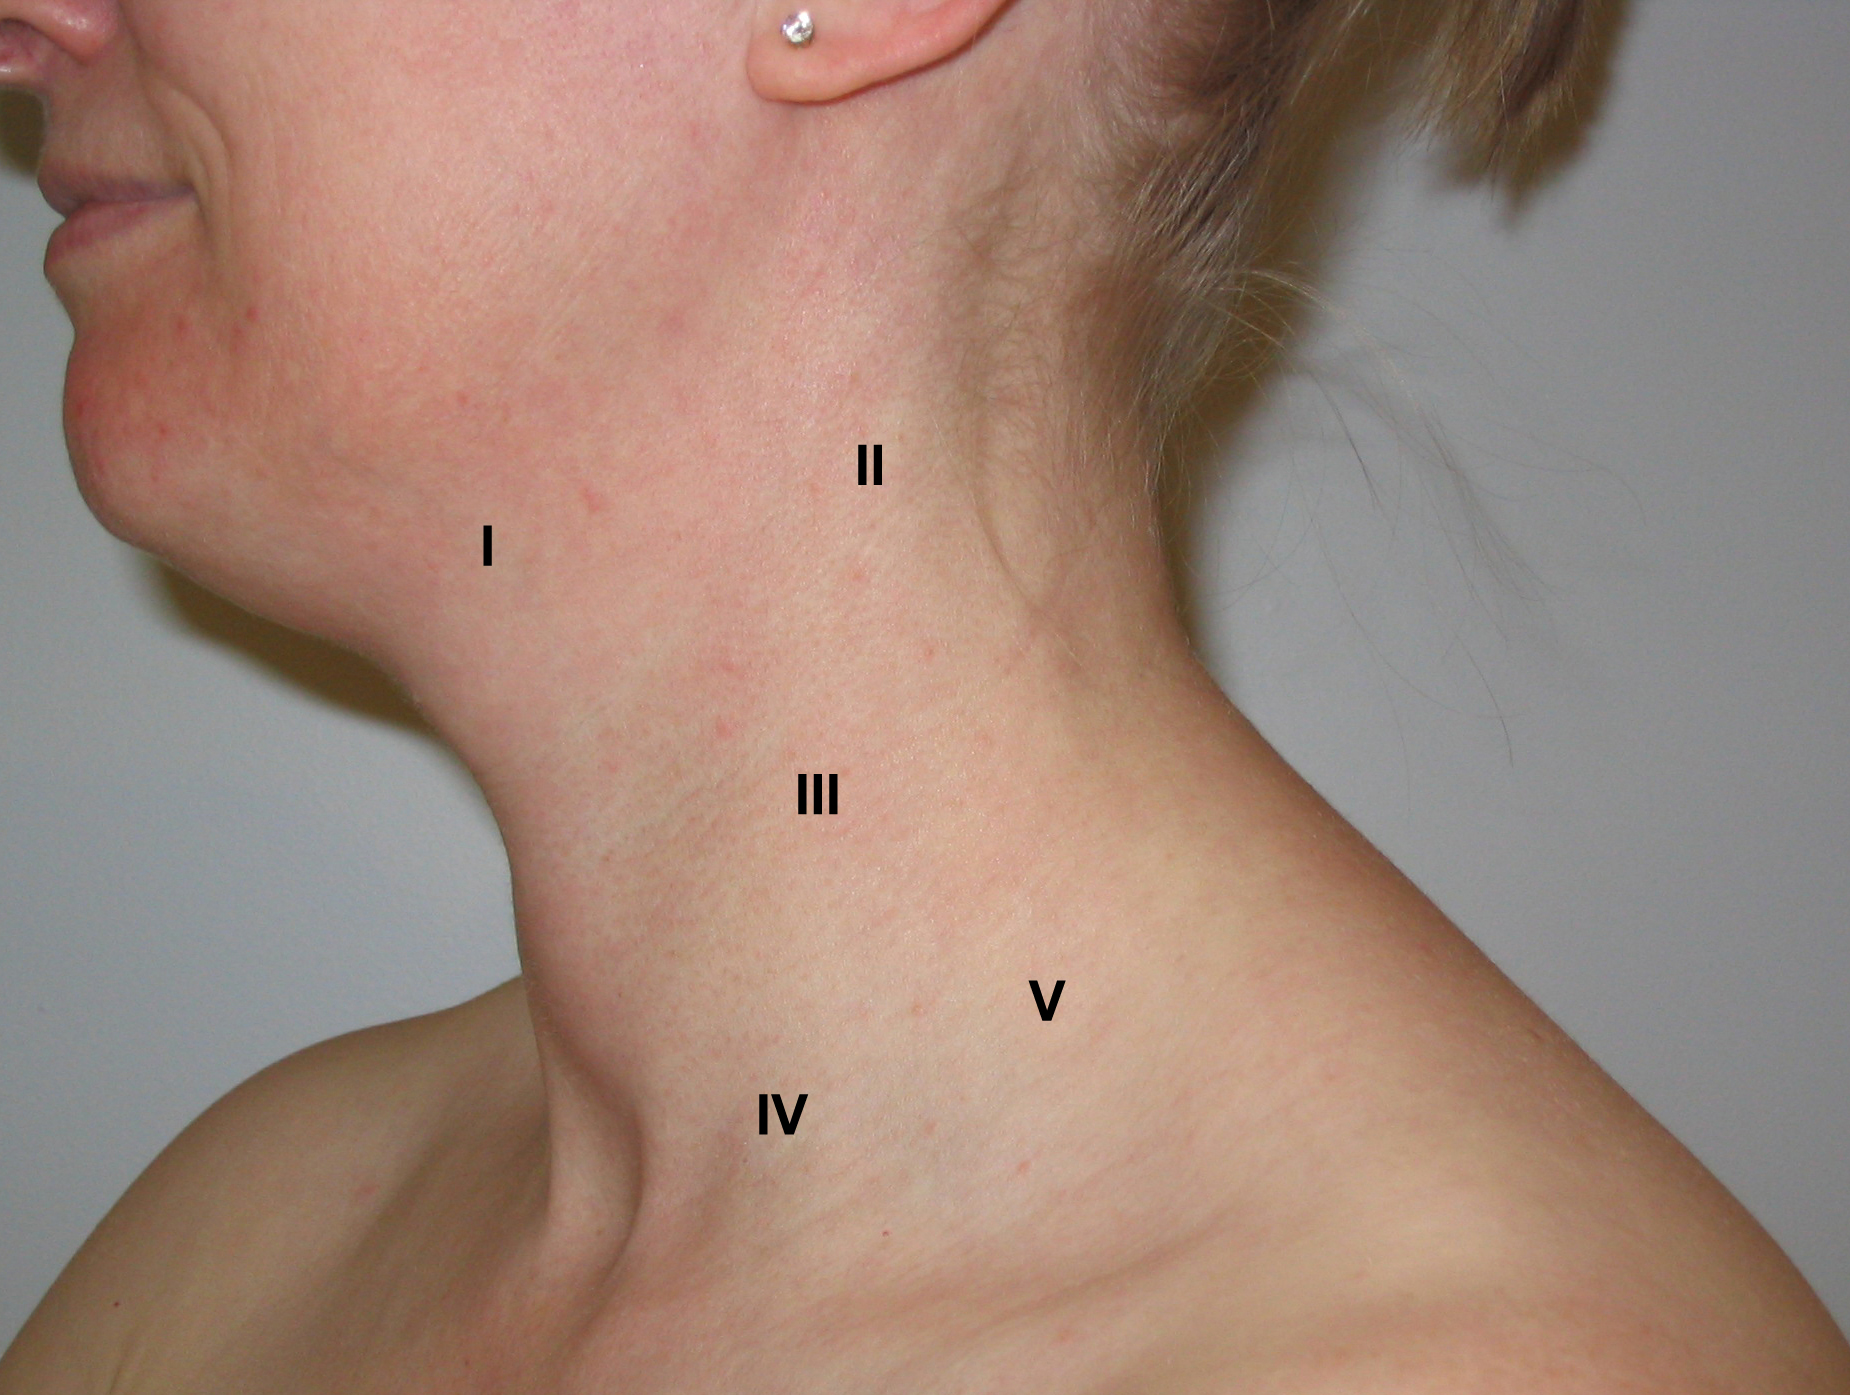 swollen lymph node on back of neck